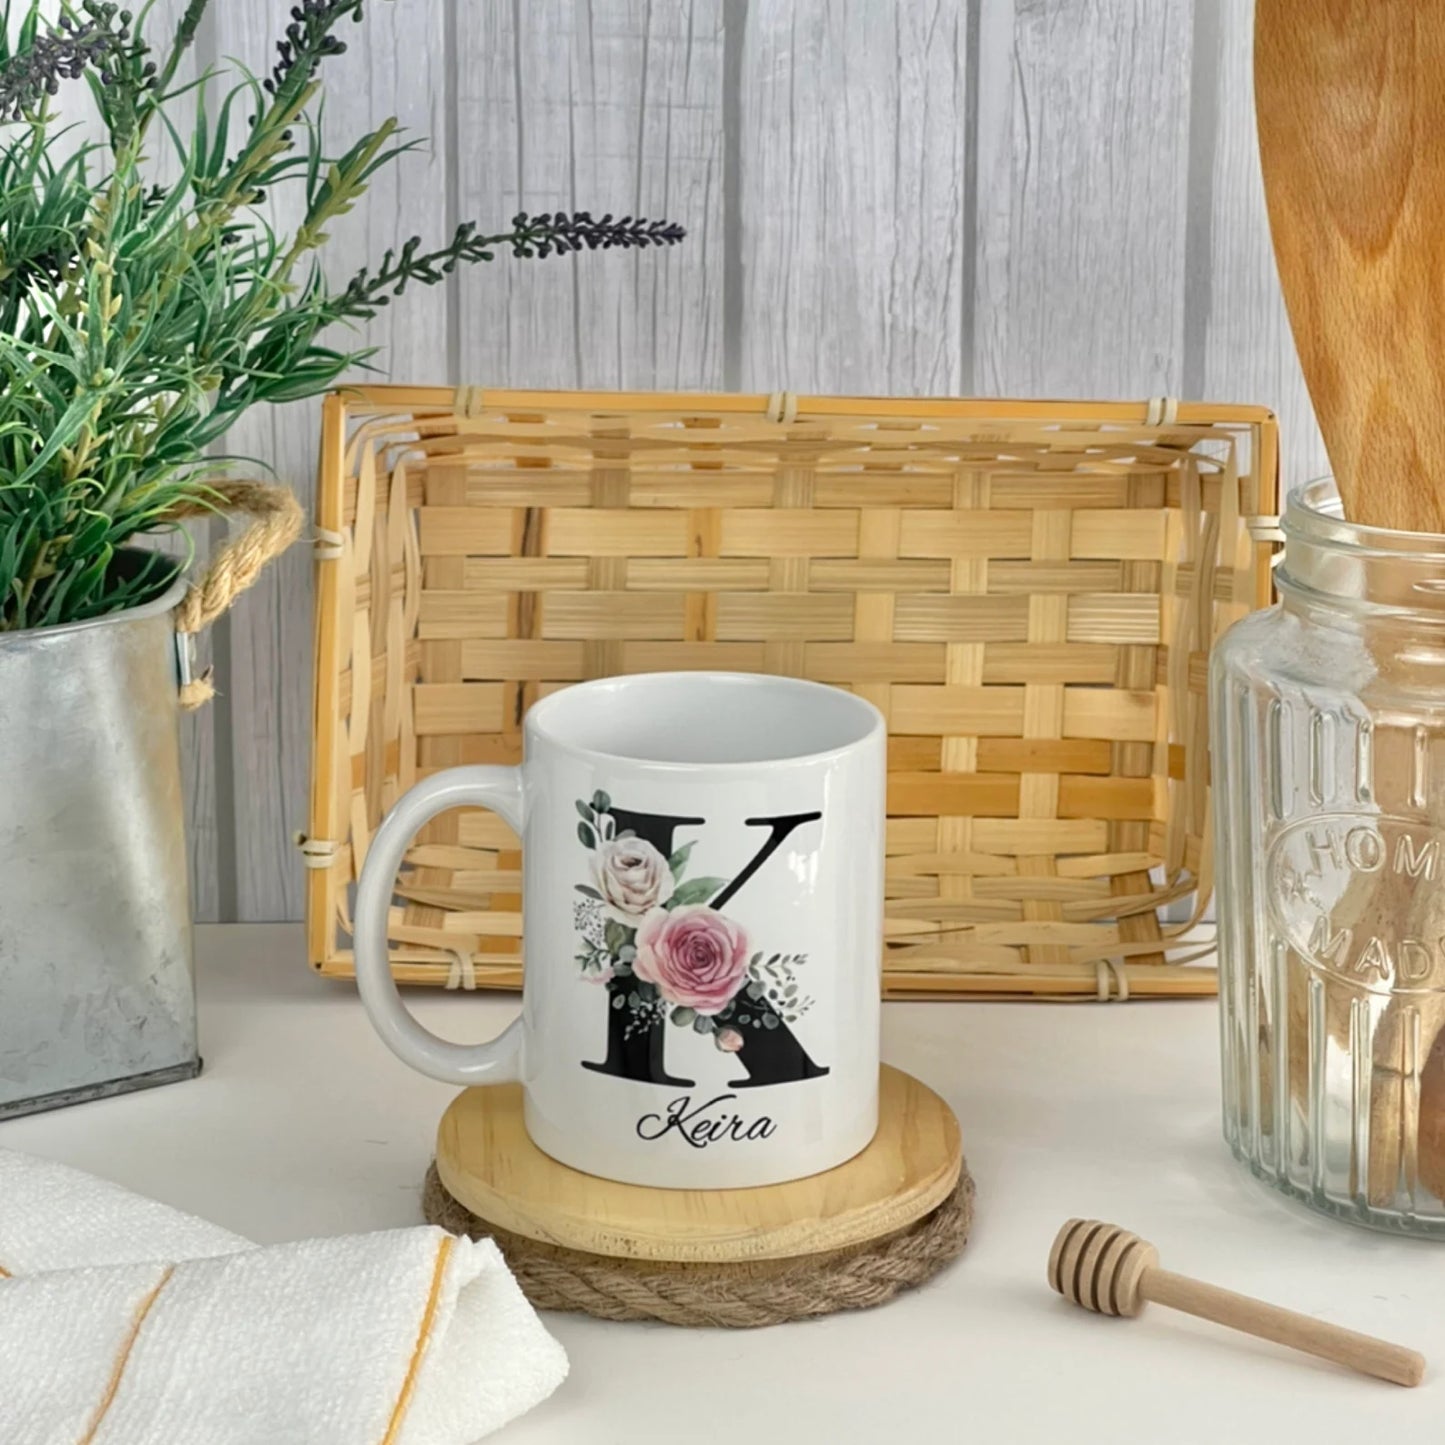 Personalised mug Hamper gift set (Hot chocolate)